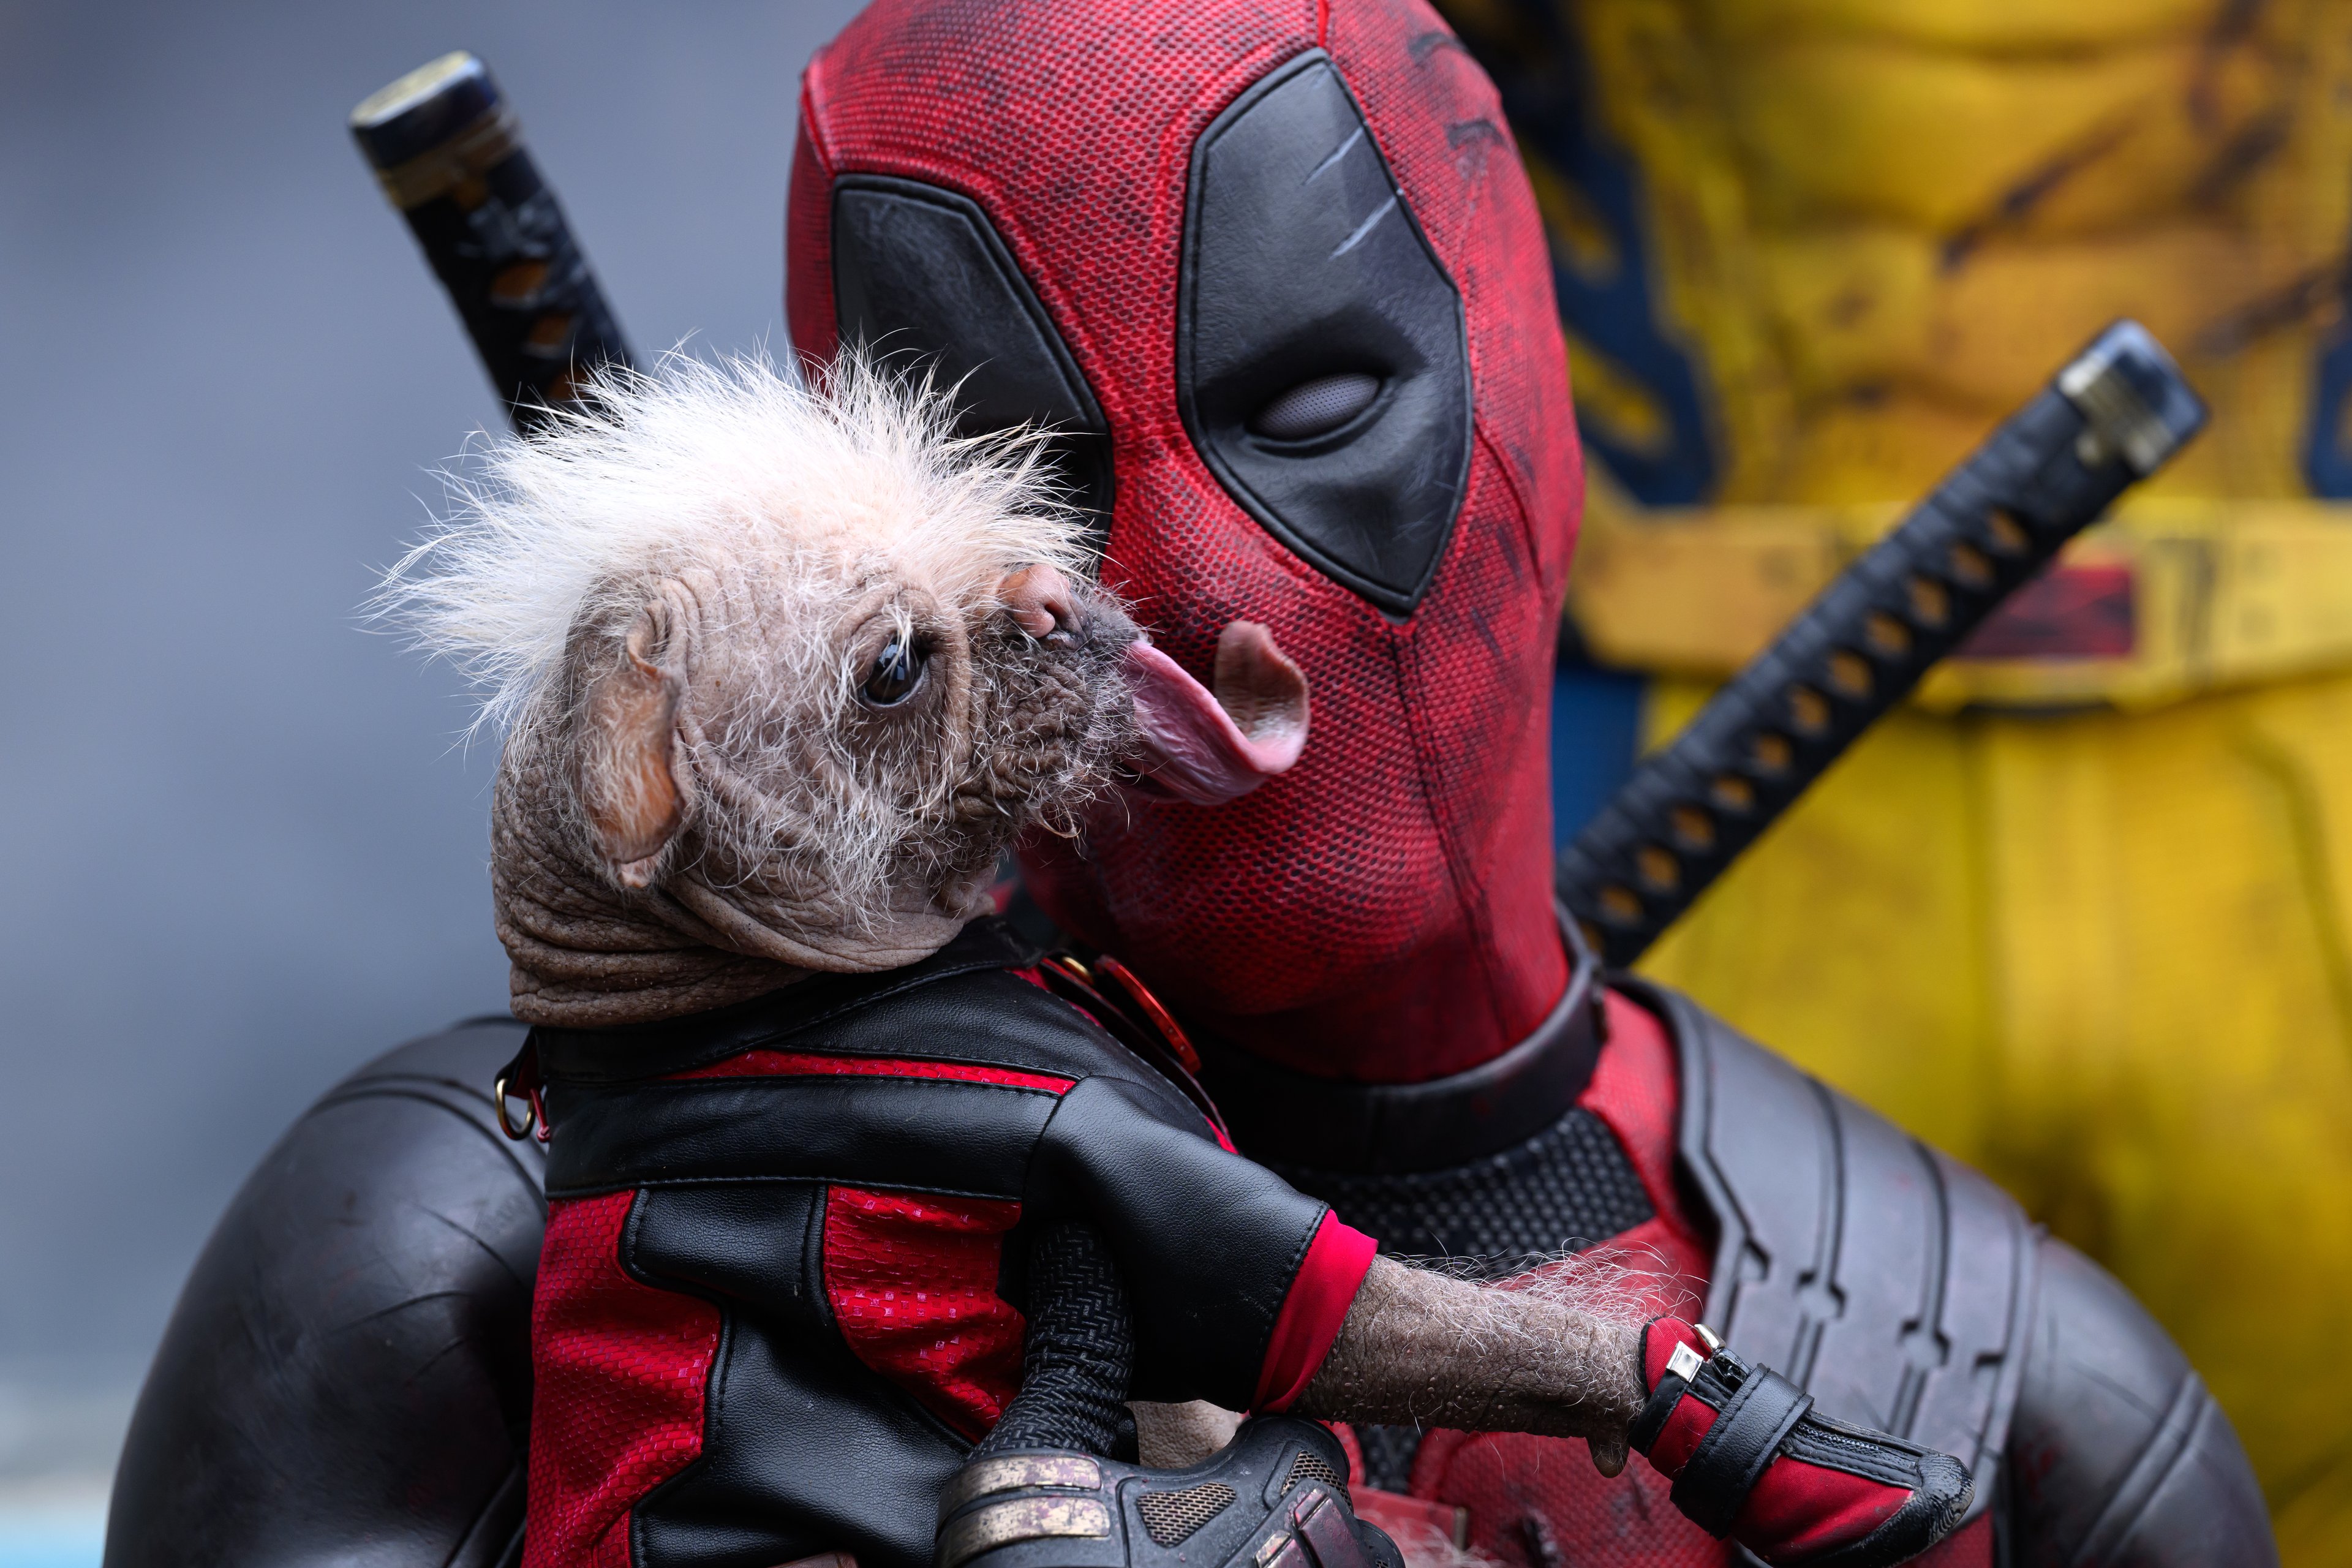 Ryan Reynolds como Deadpool/Wade Wilson em "Deadpool & Wolverine"